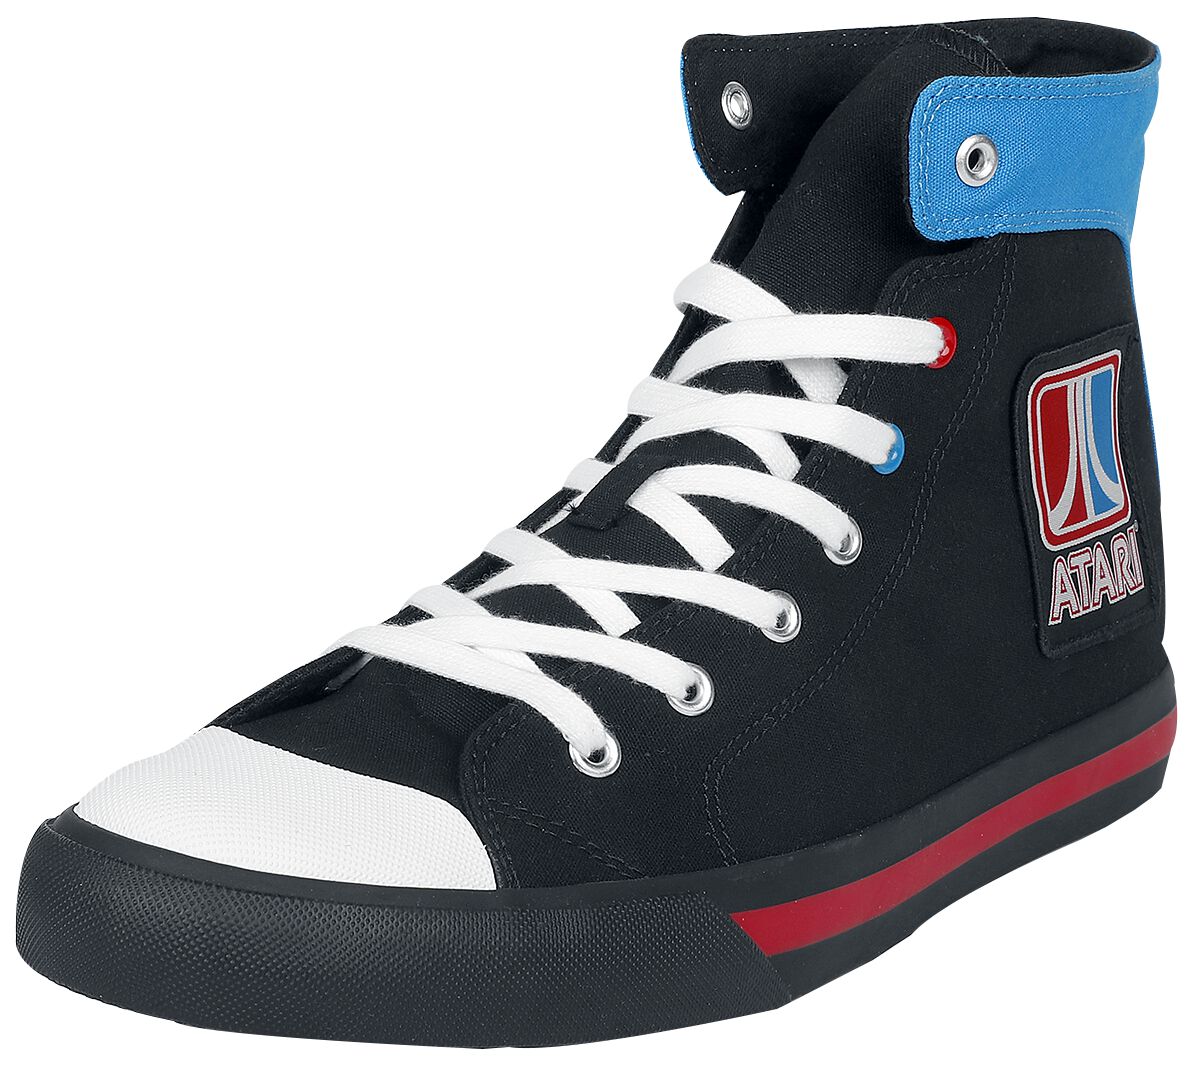 atari - gaming sneaker high - sports logo - eu37 bis eu41 - grÃ¶ÃŸe eu39 - - emp exklusives merchandise! multicolor